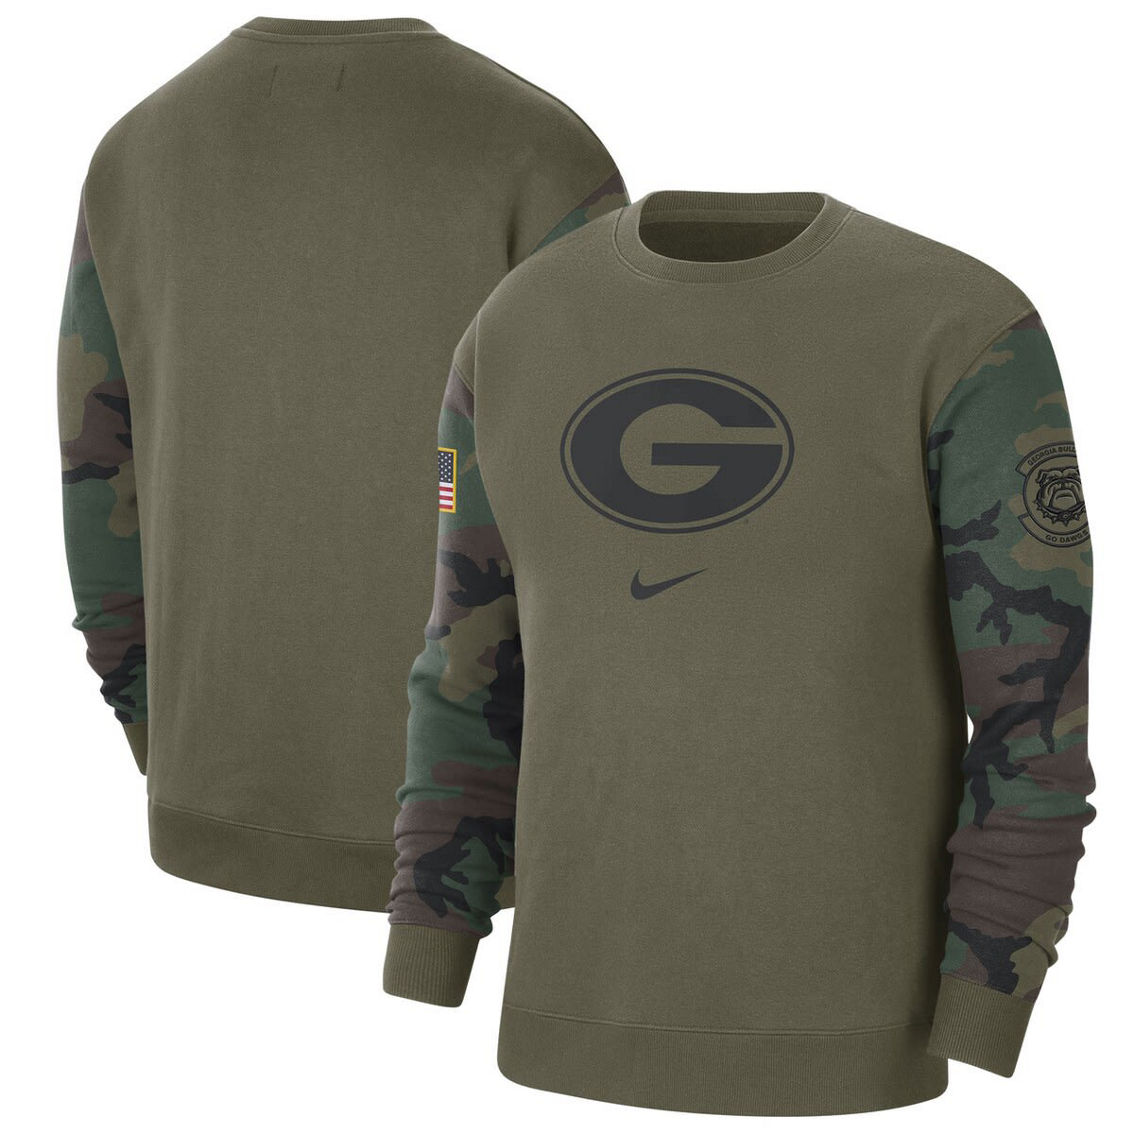 Nike Men's Olive Georgia Bulldogs Military Pack Club Pullover Sweatshirt - Image 2 of 4